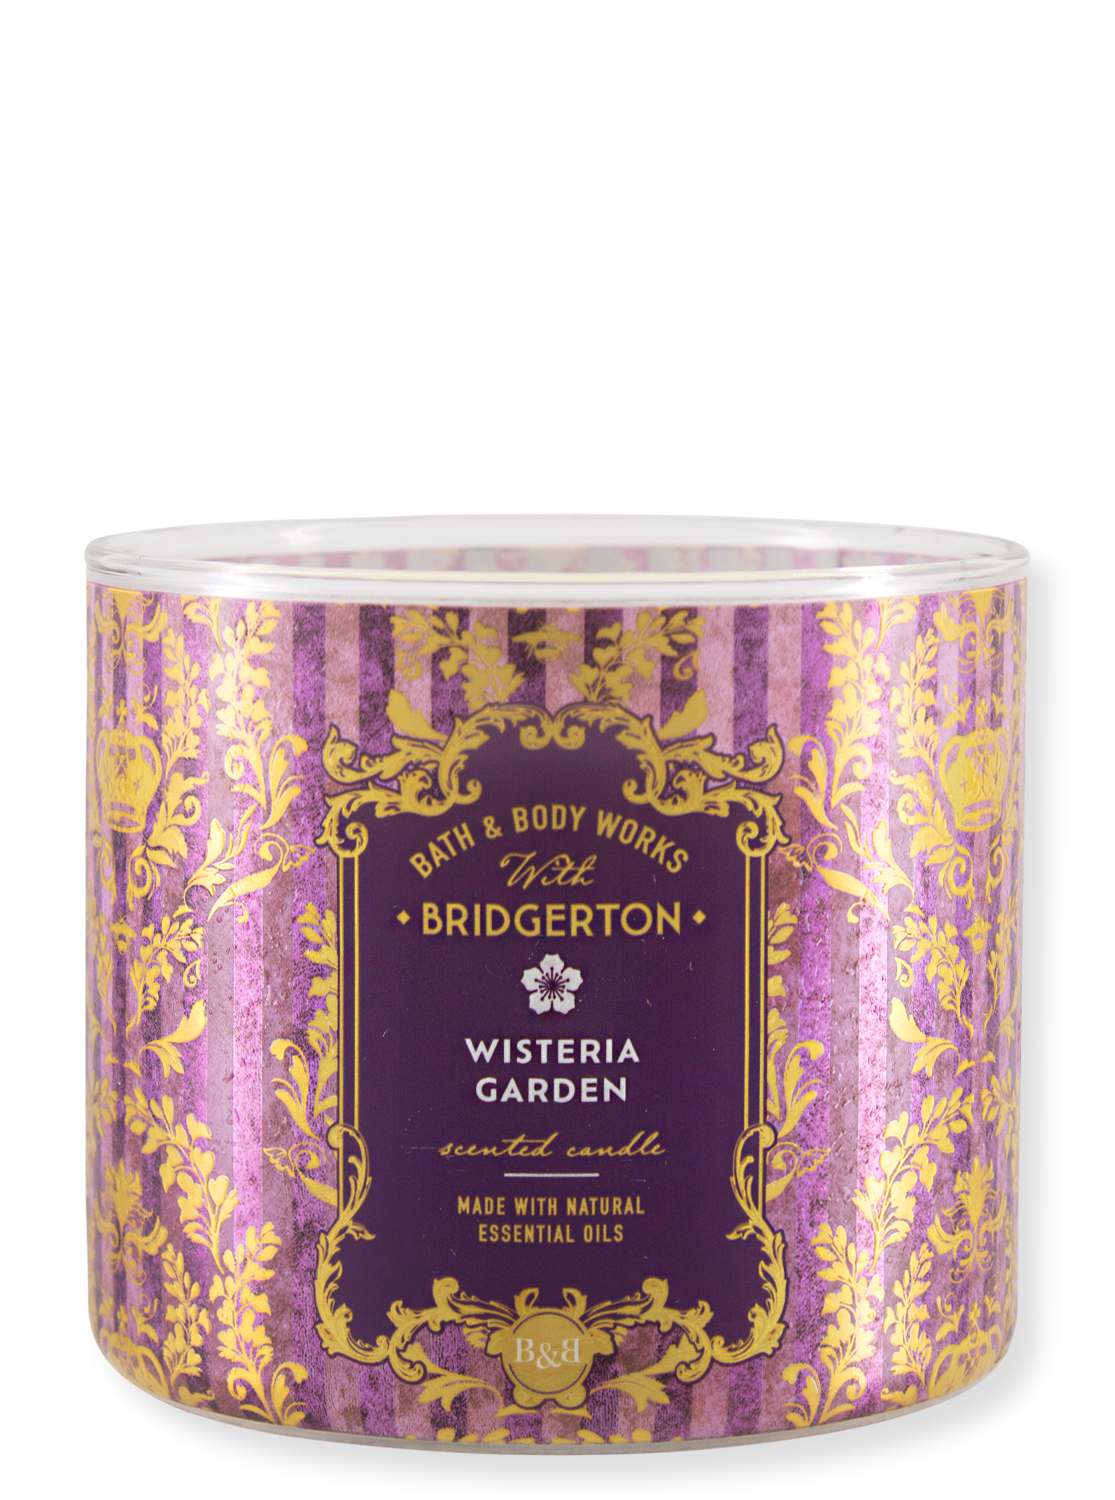 3 -Doct Candle - Bridgerton Wisteria Garden - Limited Edition - 411G